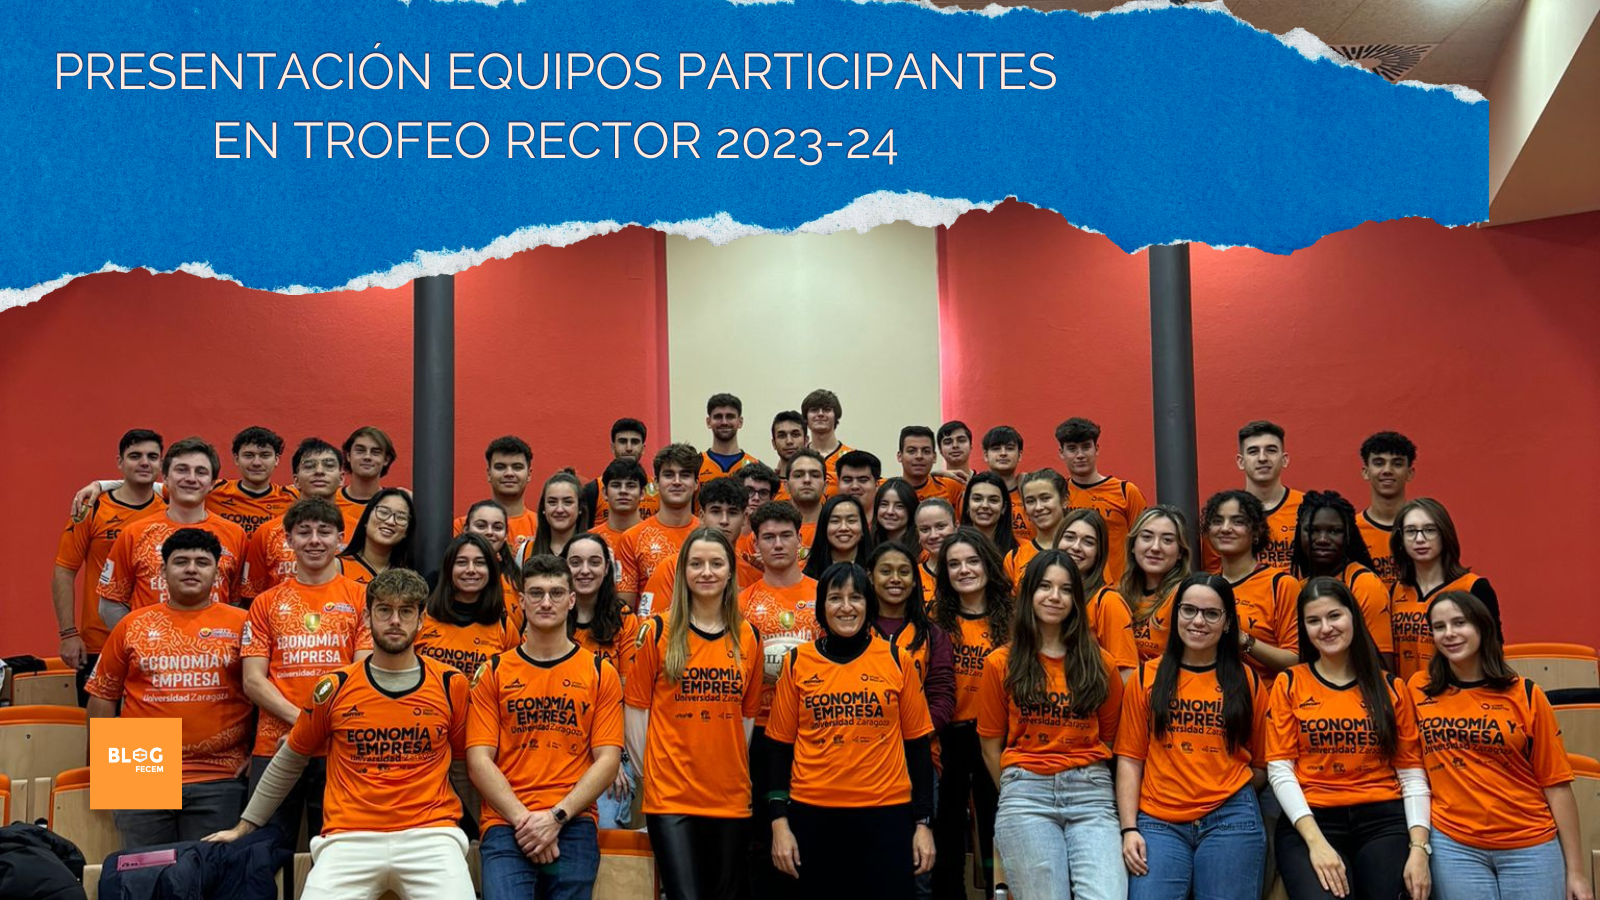 PRESENTACIÓN EQUIPOS PARTICIPANTES EN TROFEO RECTOR 2023-24